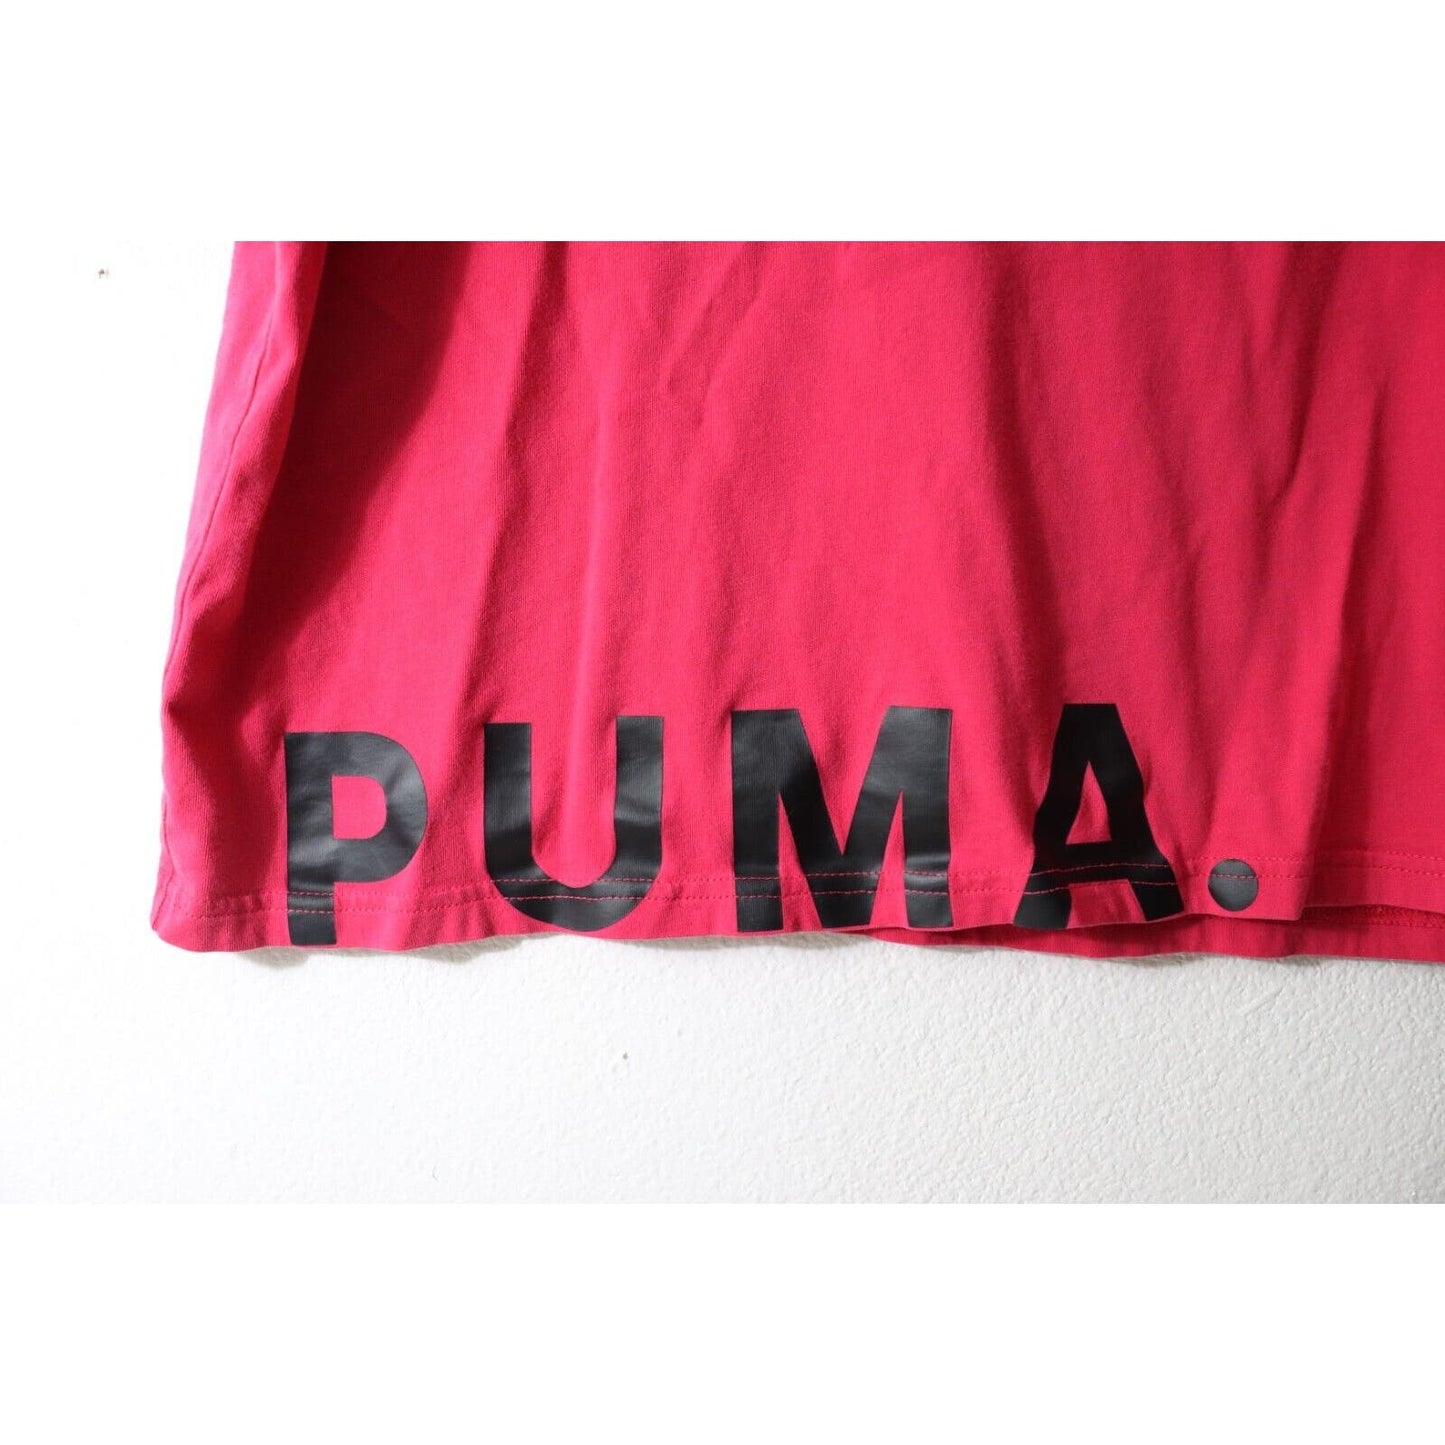 Puma Pink Short Sleeve Top Activewear Size Medium